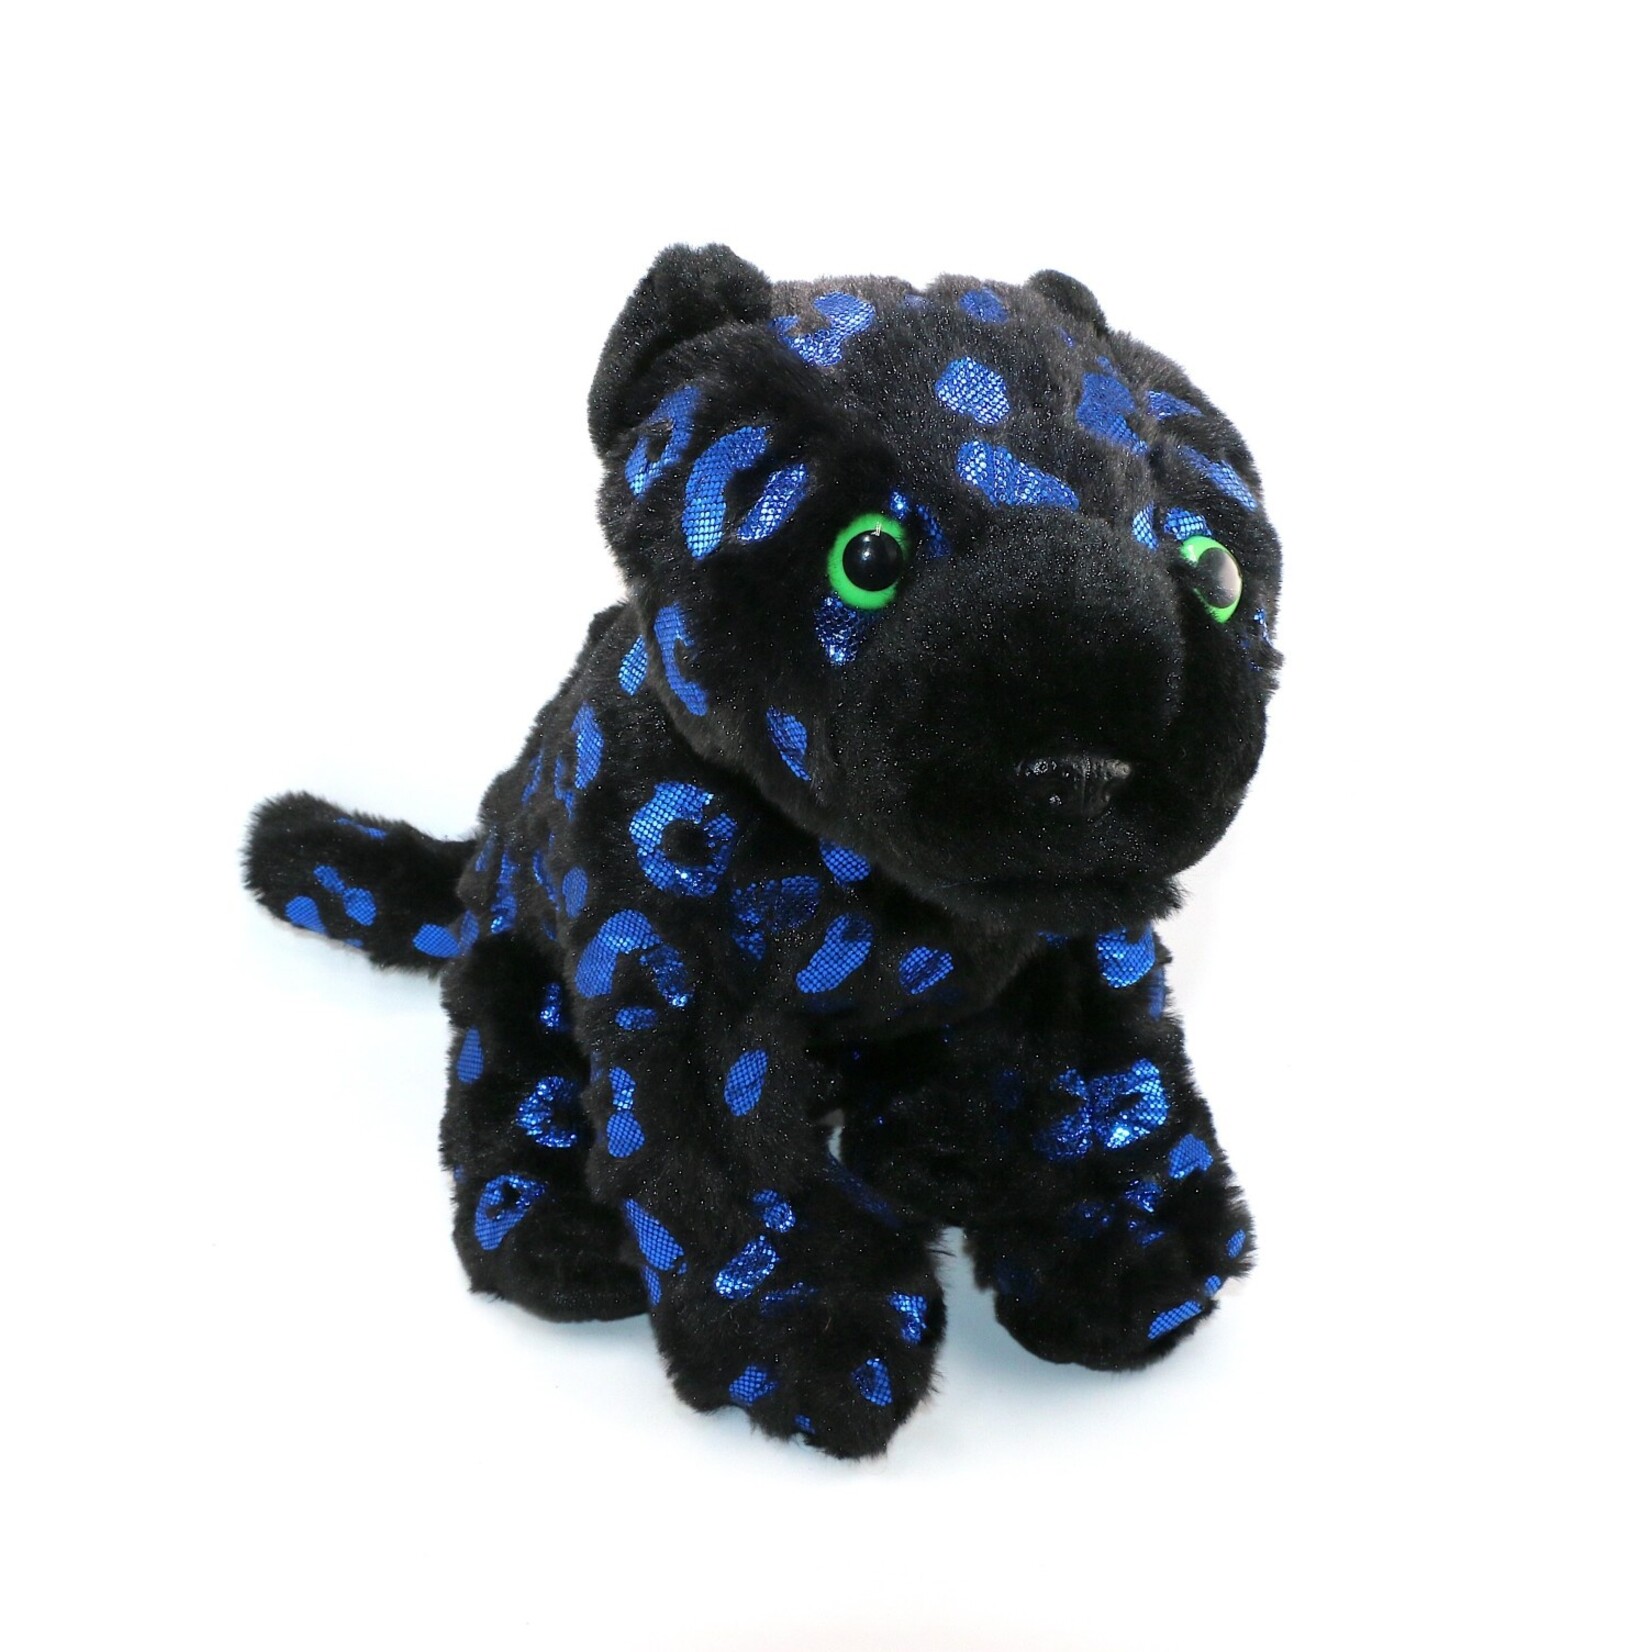 K M Intl/wild Republic Panther Stuffed Animal by Foilkins